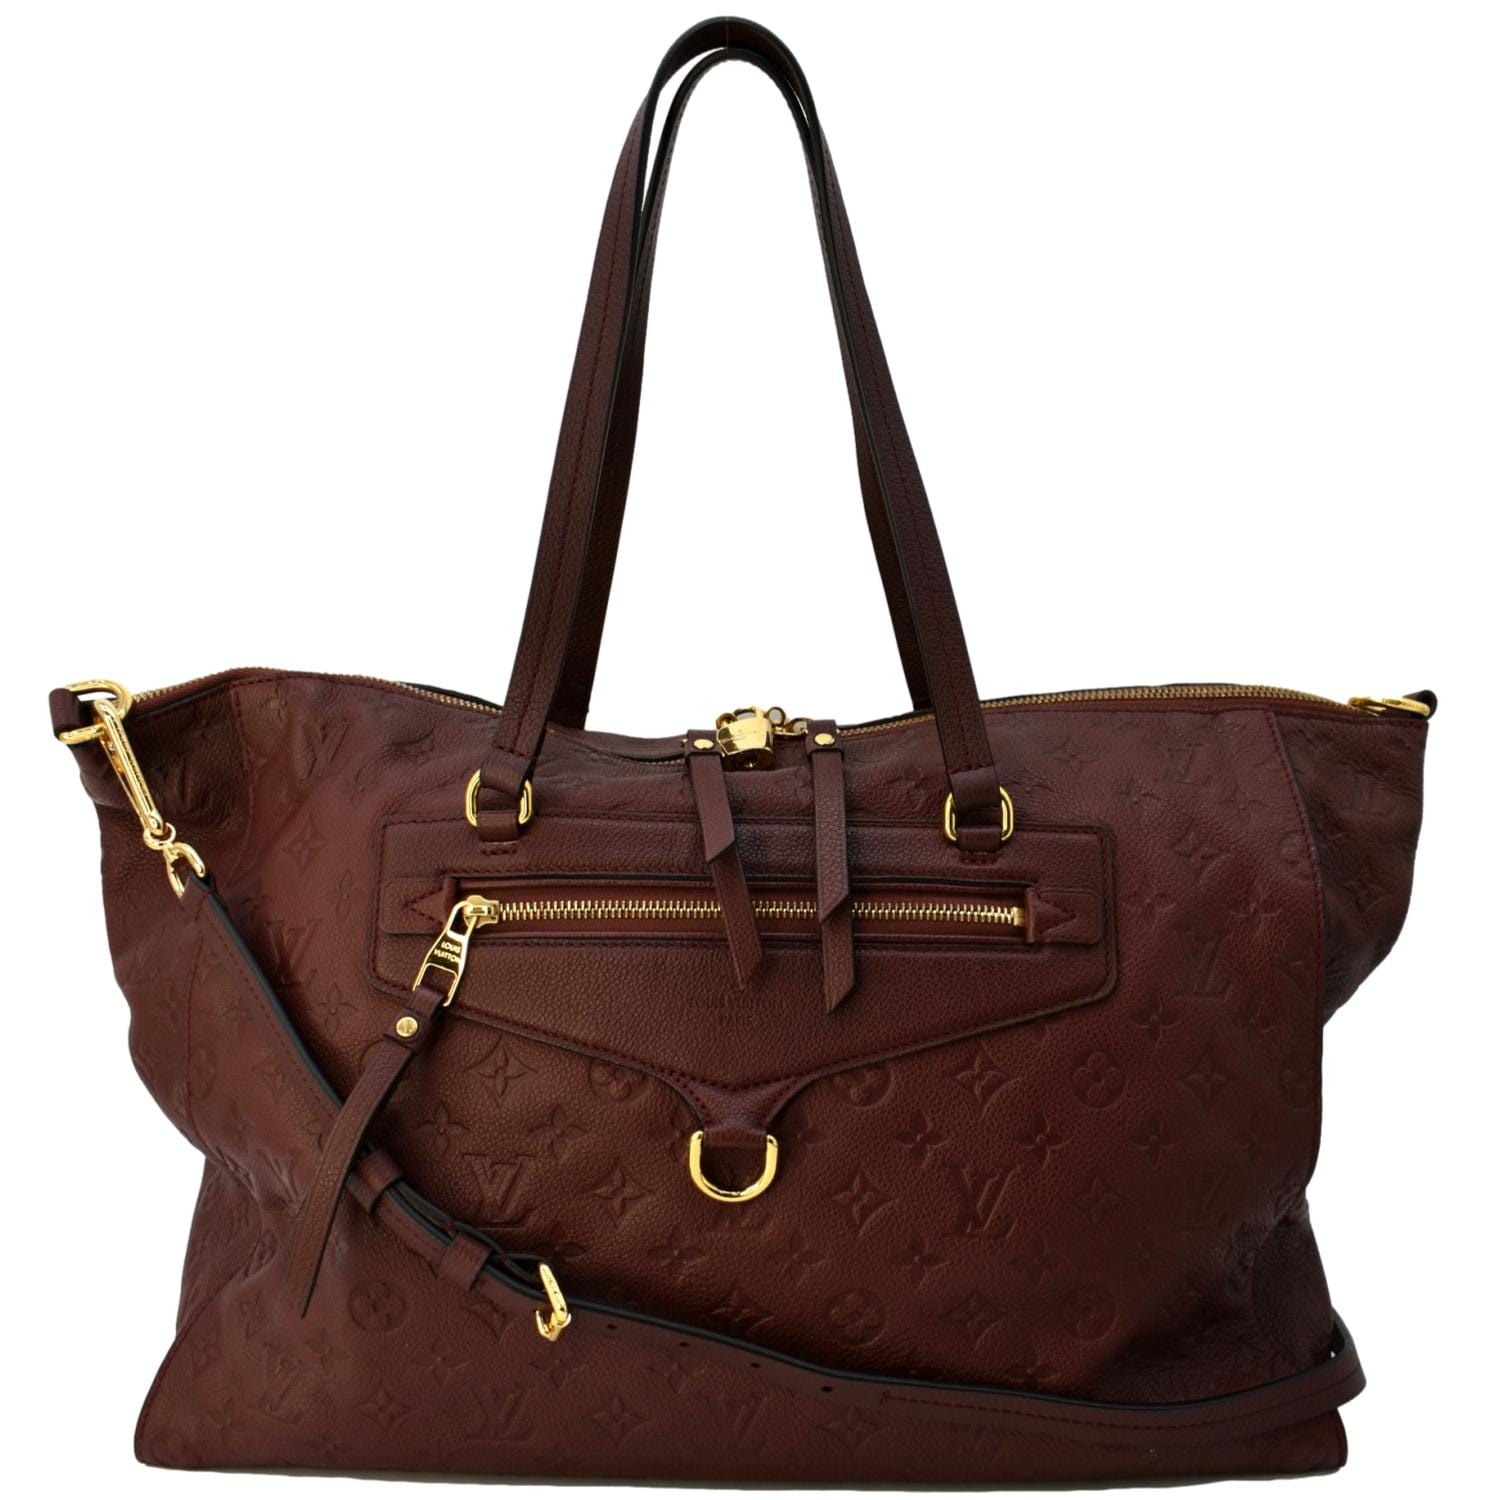 Chanel Handbags Classic - Shop on Pinterest